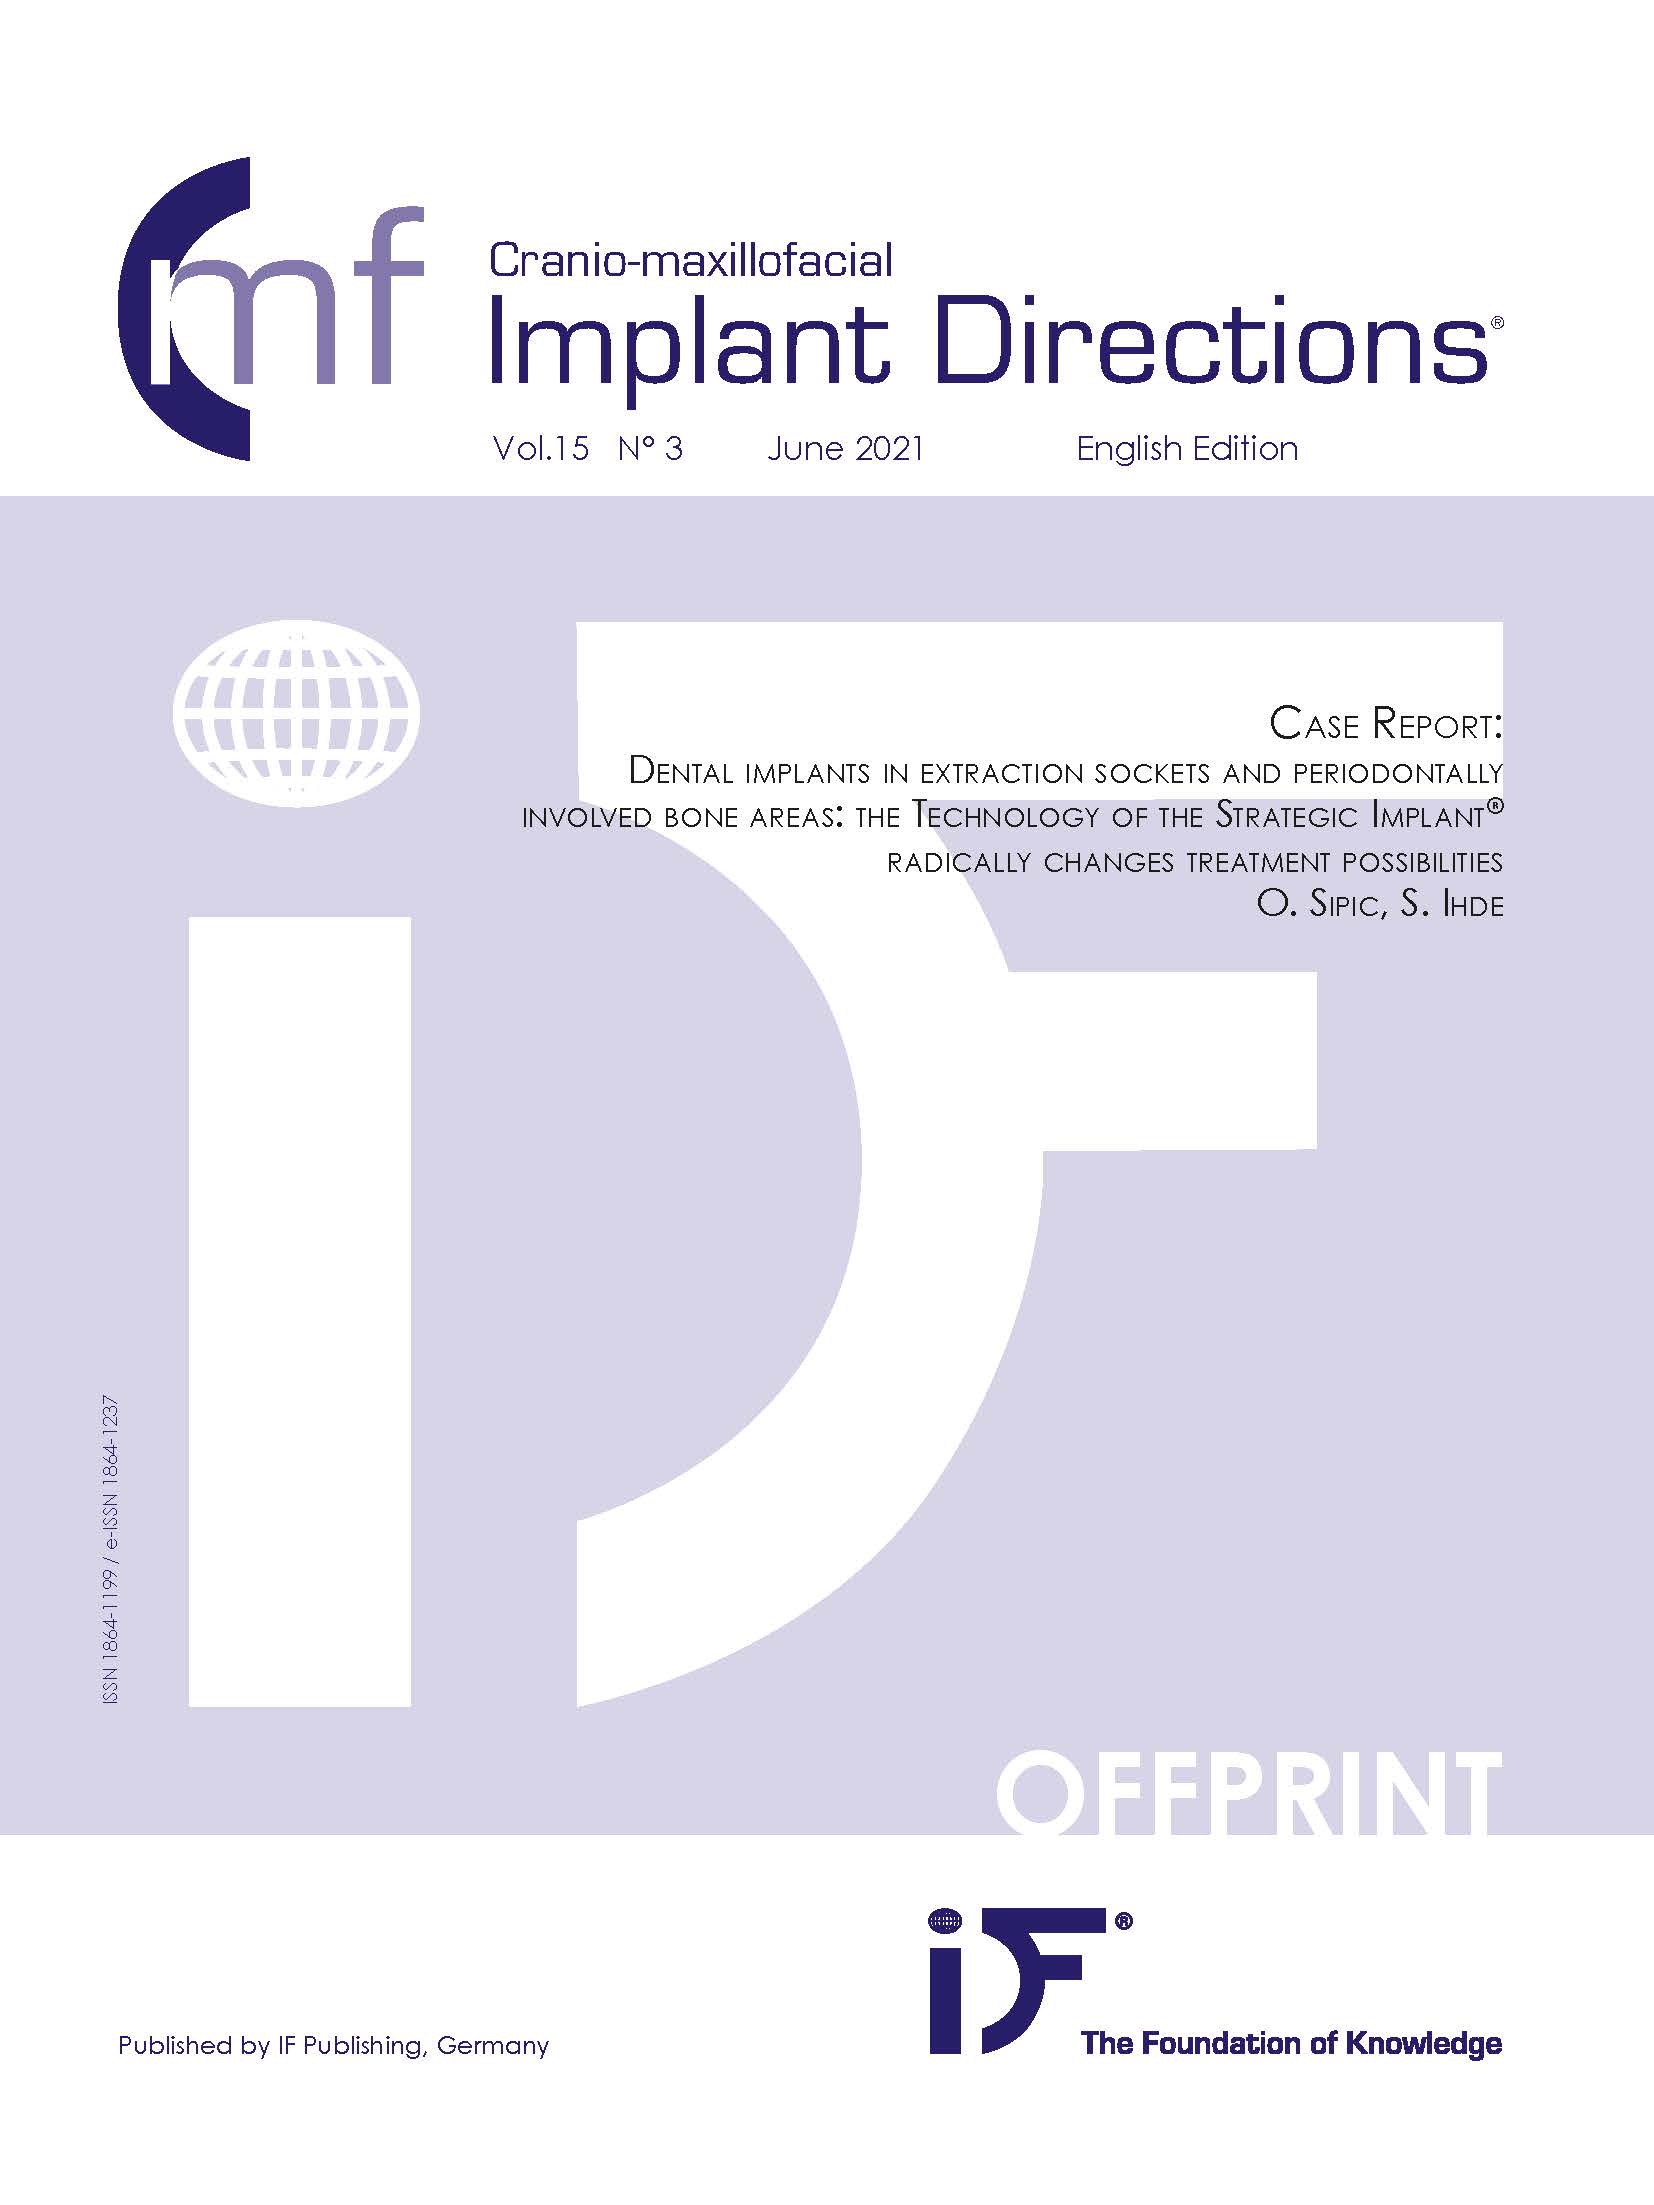 Preview Cranio-maxillofacial Implant Directions Vol. 15 Issue 3 EN - June 2021